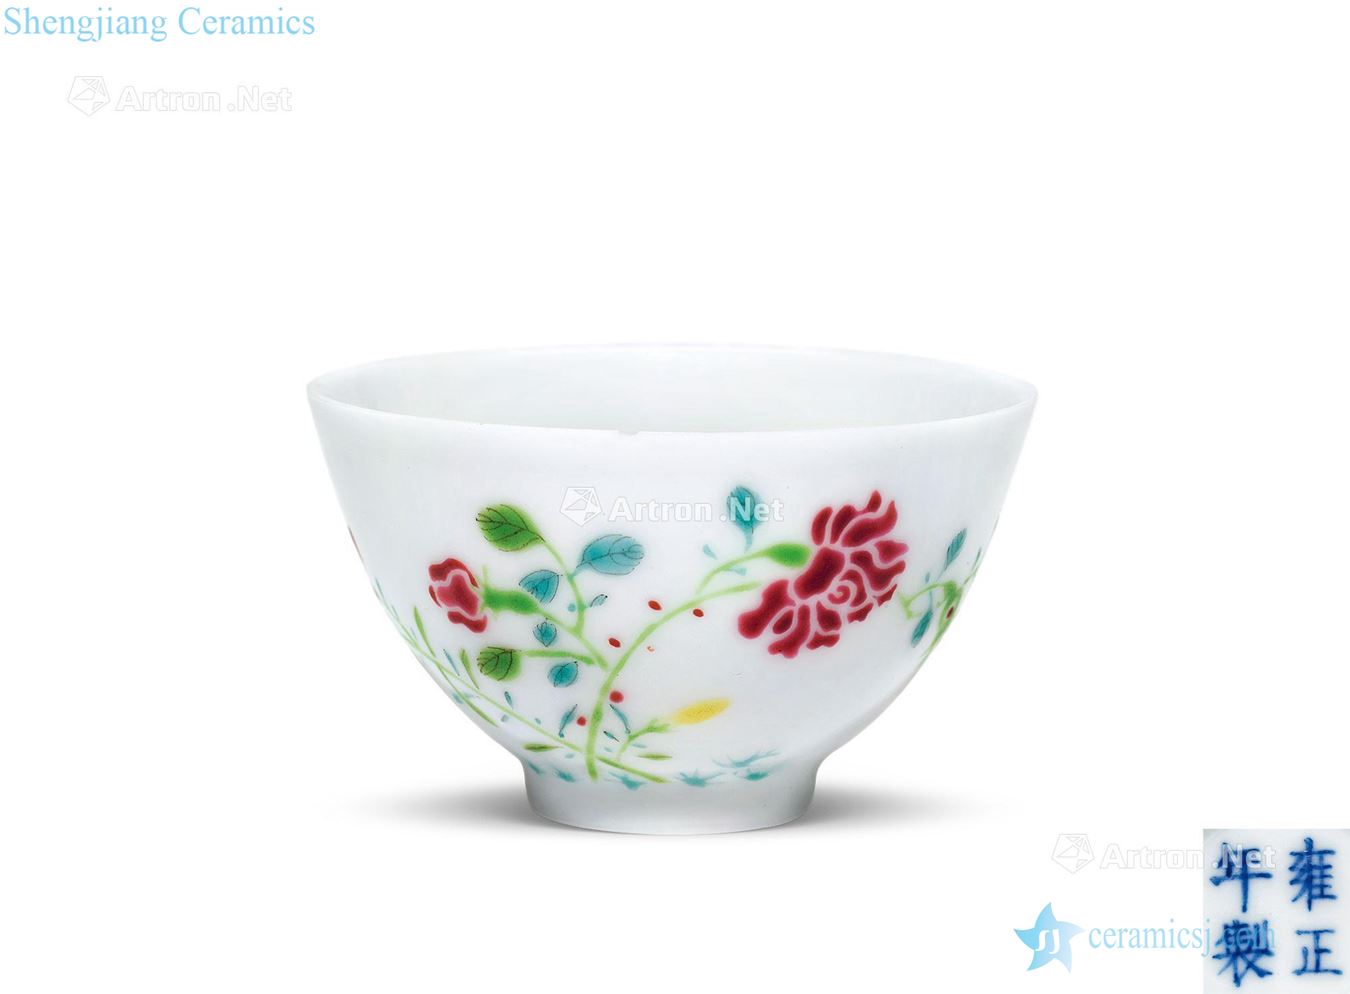 Qing yongzheng pastel flowers small cup